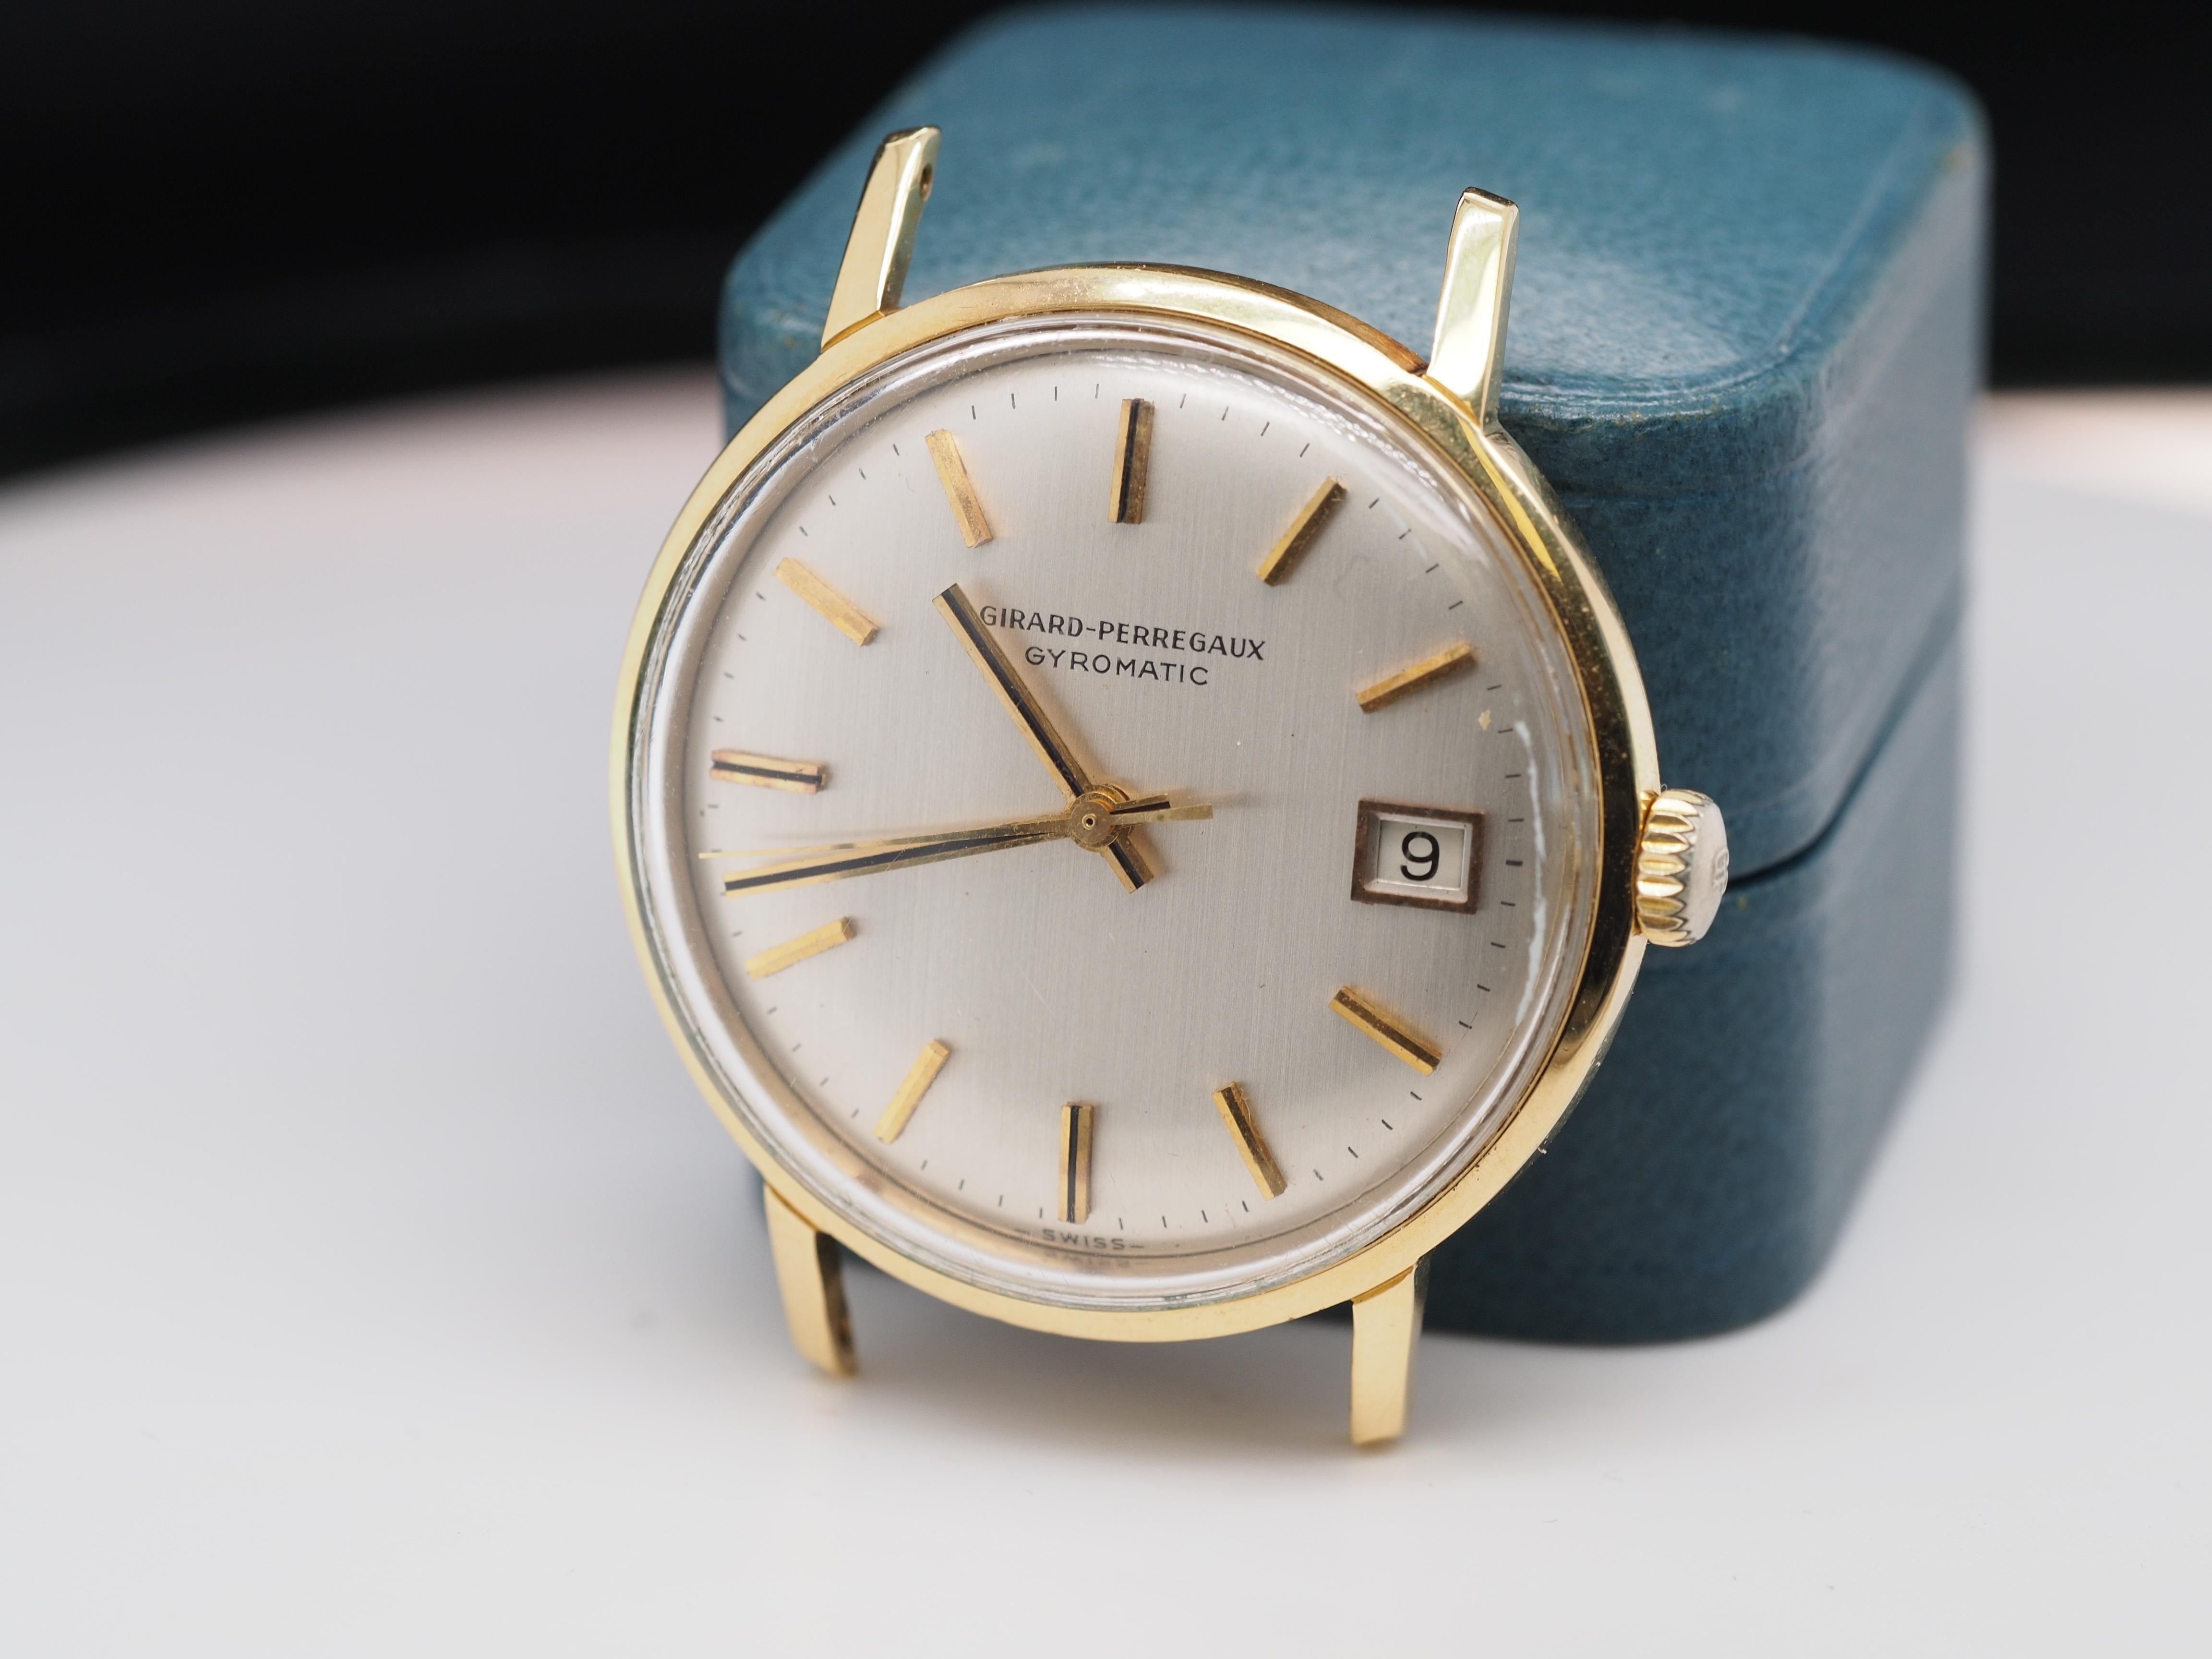 Girard Perregaux 18k Yellow Gold Gyromatic Manual Wind Wrist Watch For Sale 1